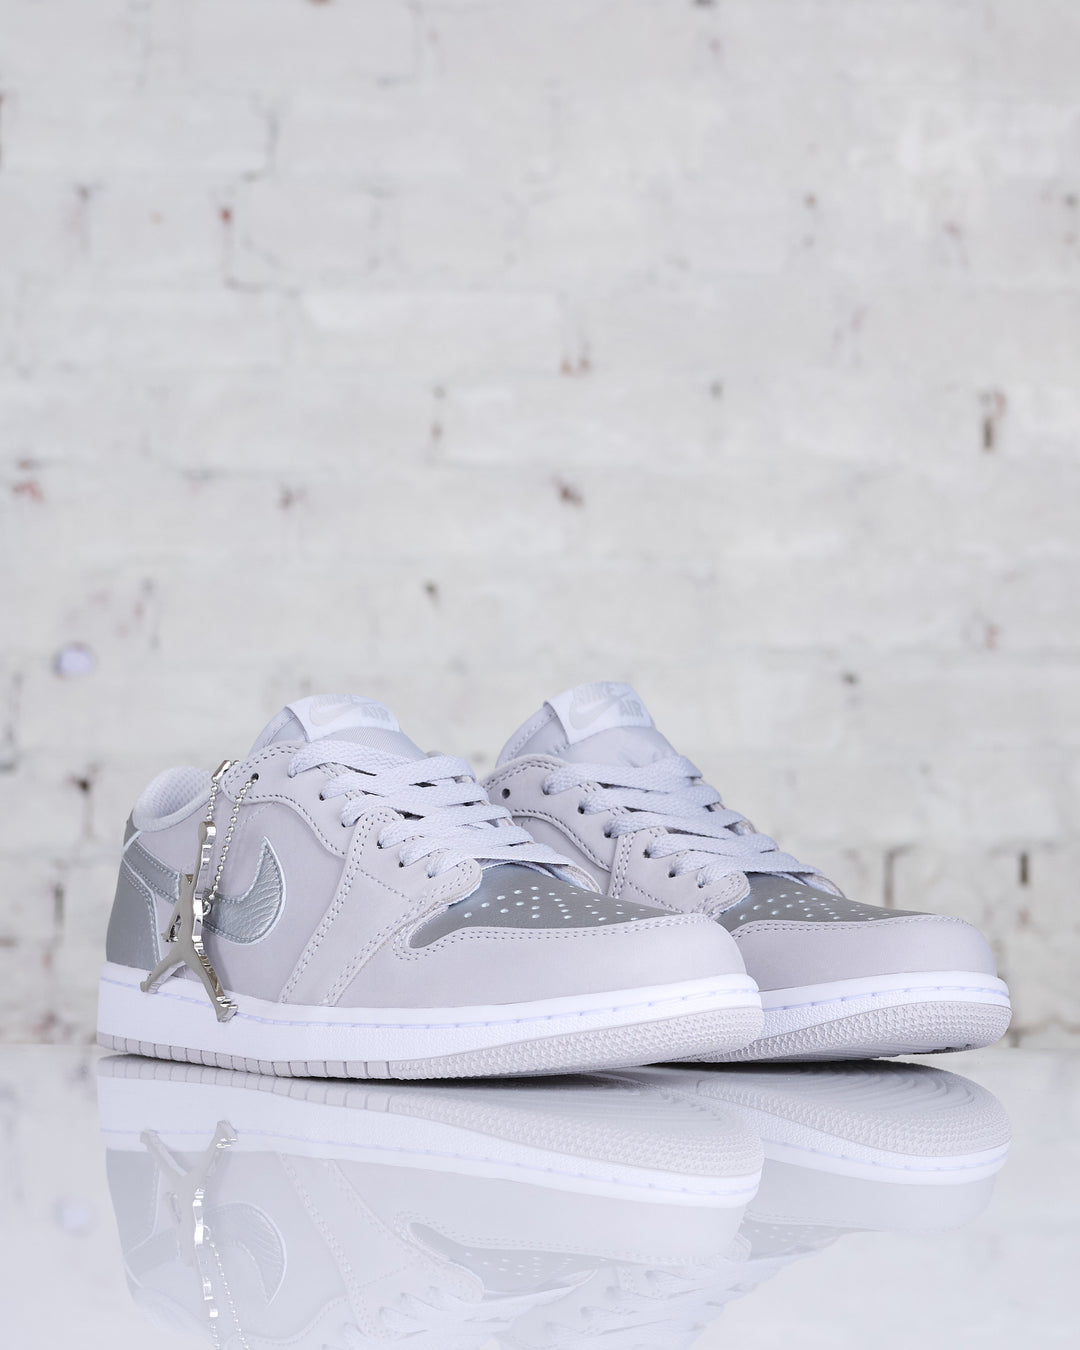 Nike Men's Air Jordan 1 Low OG "Silver" Neutral Grey/Metallic Silver-White